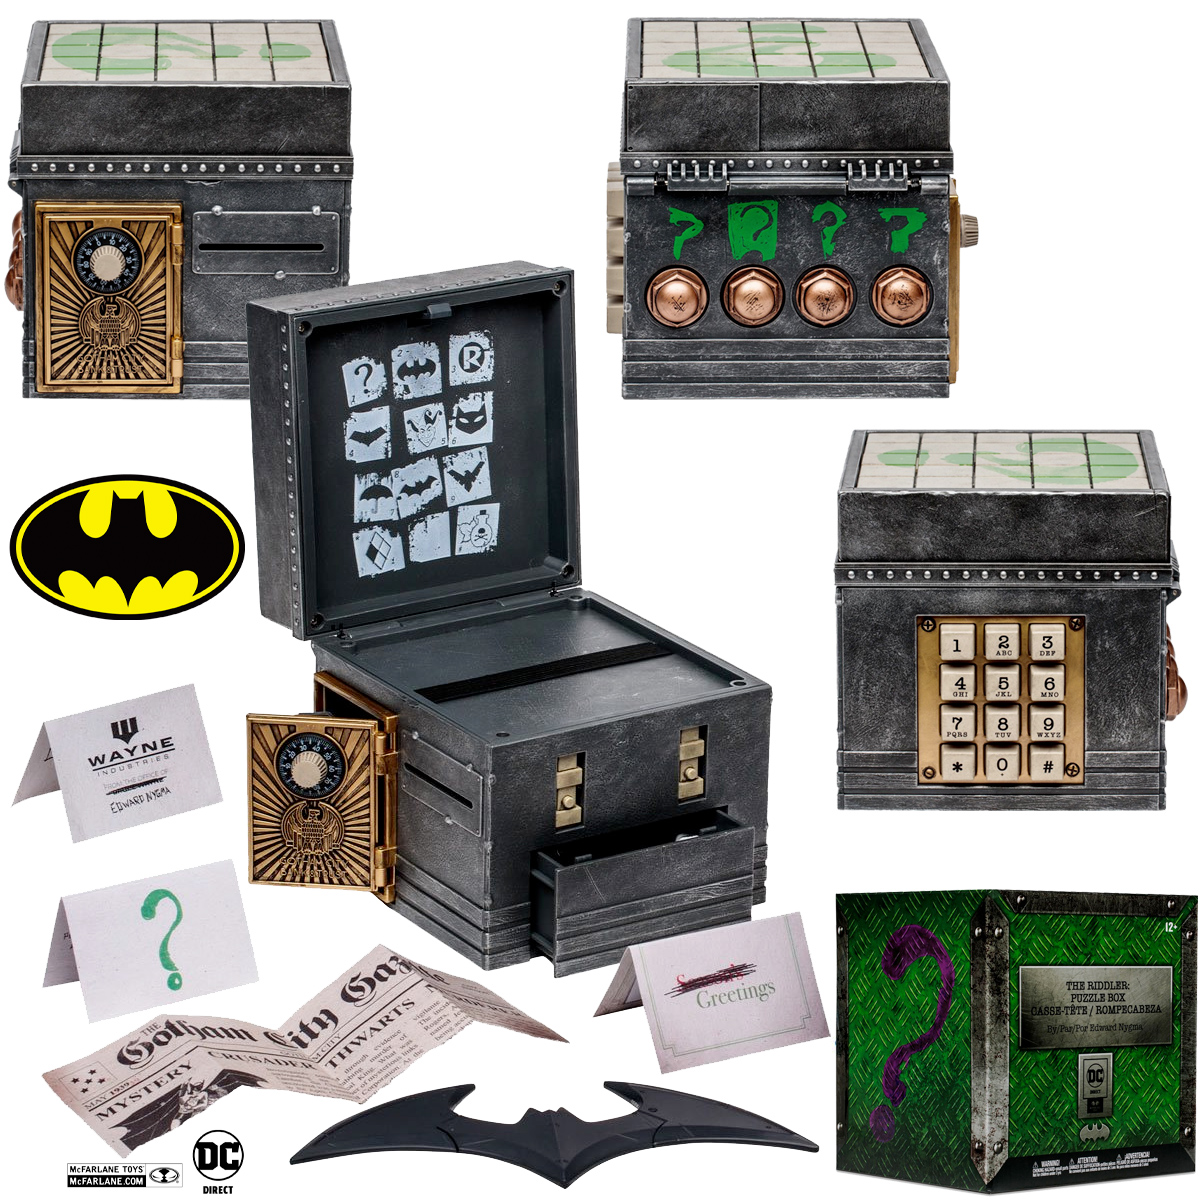 Quebra-Cabeça do Charada: The Riddler Puzzle Box por Edward Nygma (Batman)